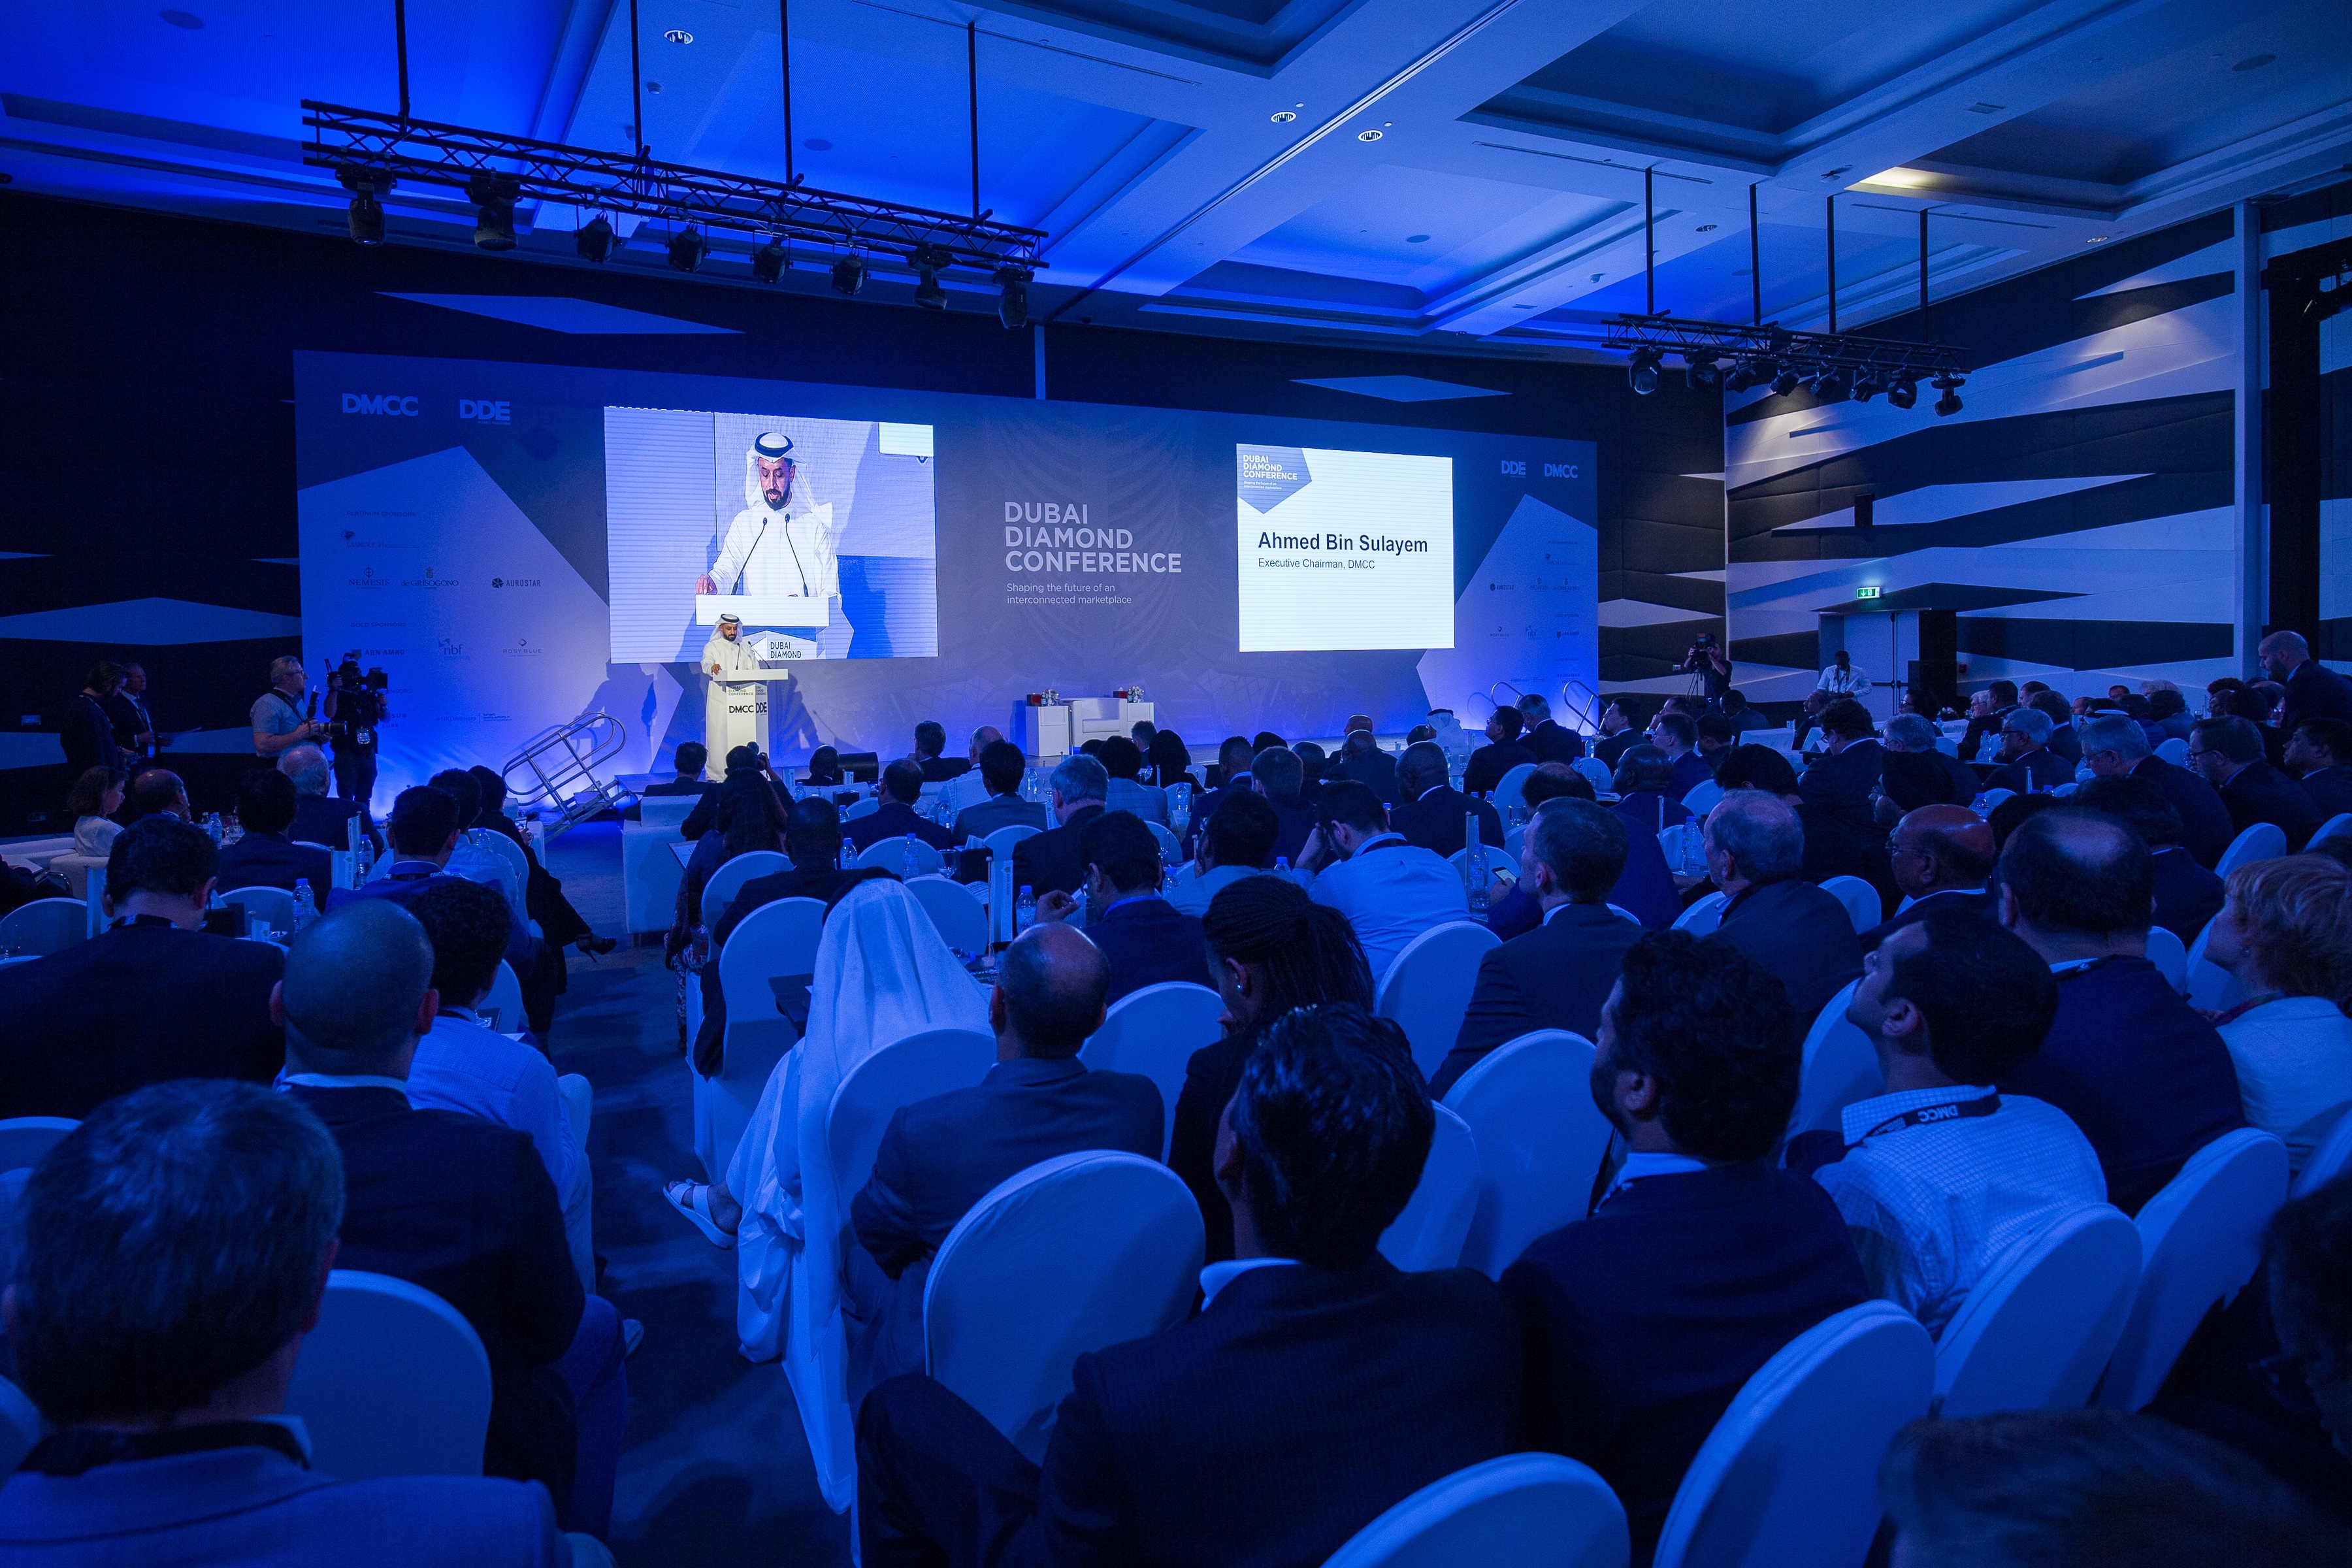 Wl company dmcc reviews. Дубайская конференция. Бизнес конференция Дубай. Конгресс Дубае. Conference в Дубае.